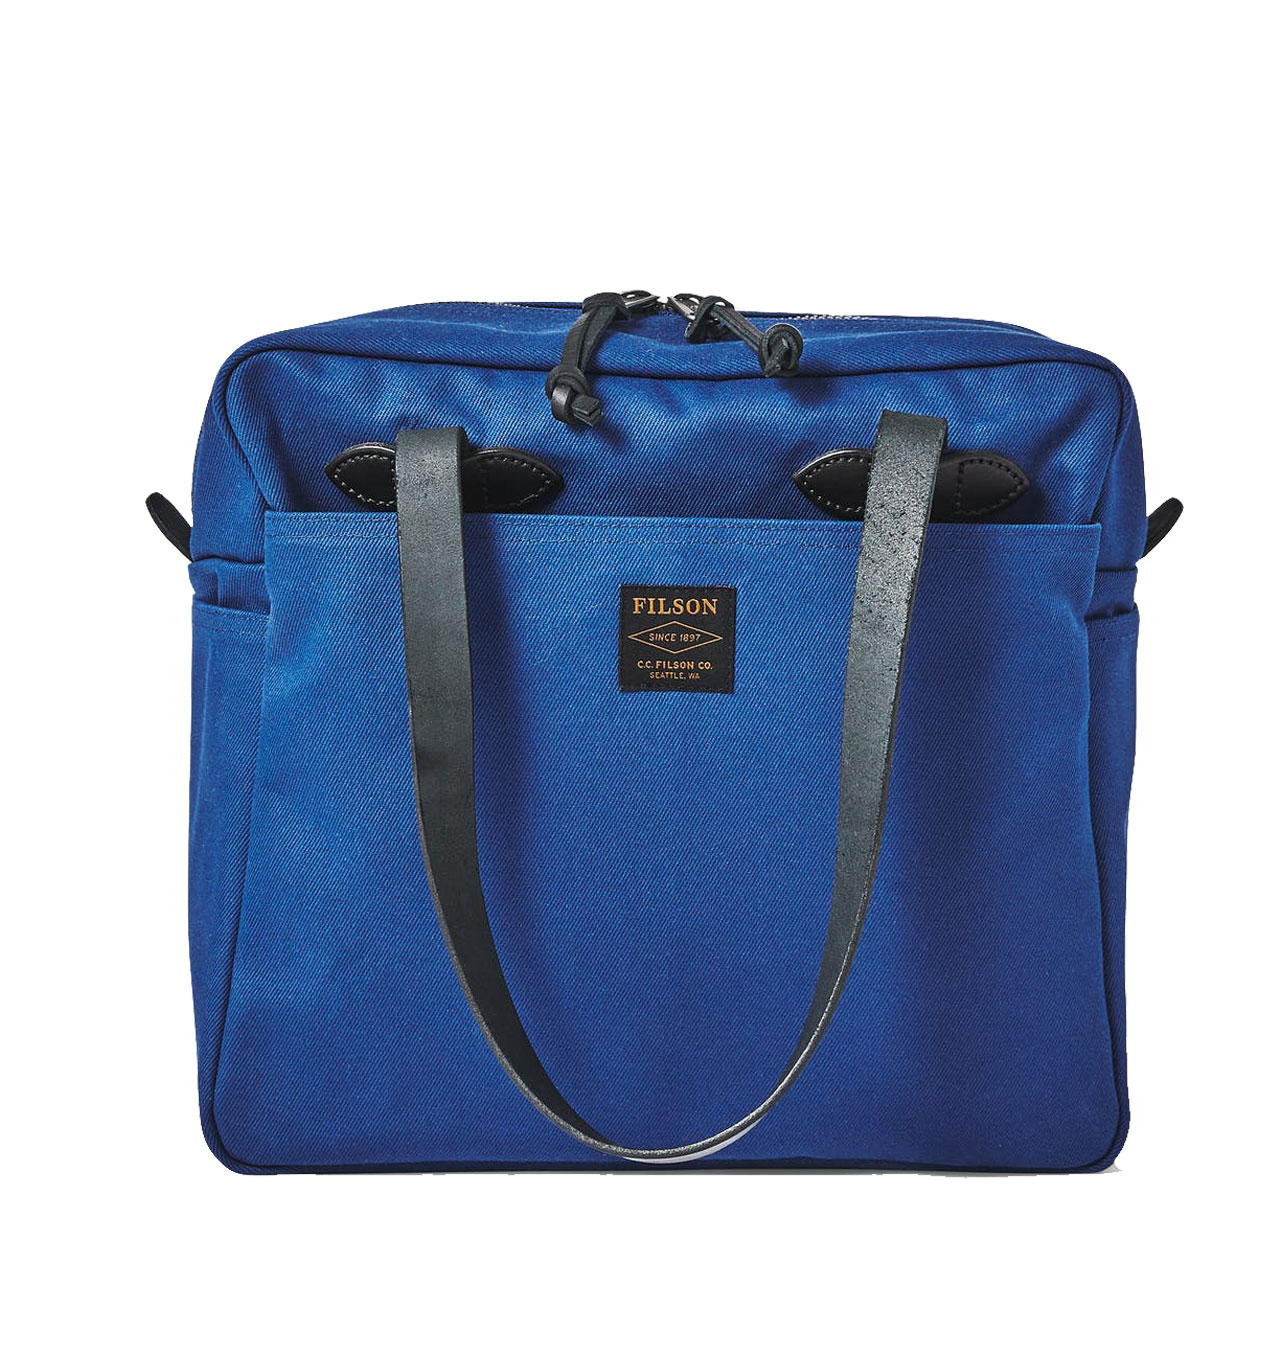 Filson - Tote Bag w/ Zipper - Flag Blue LTD EDITION